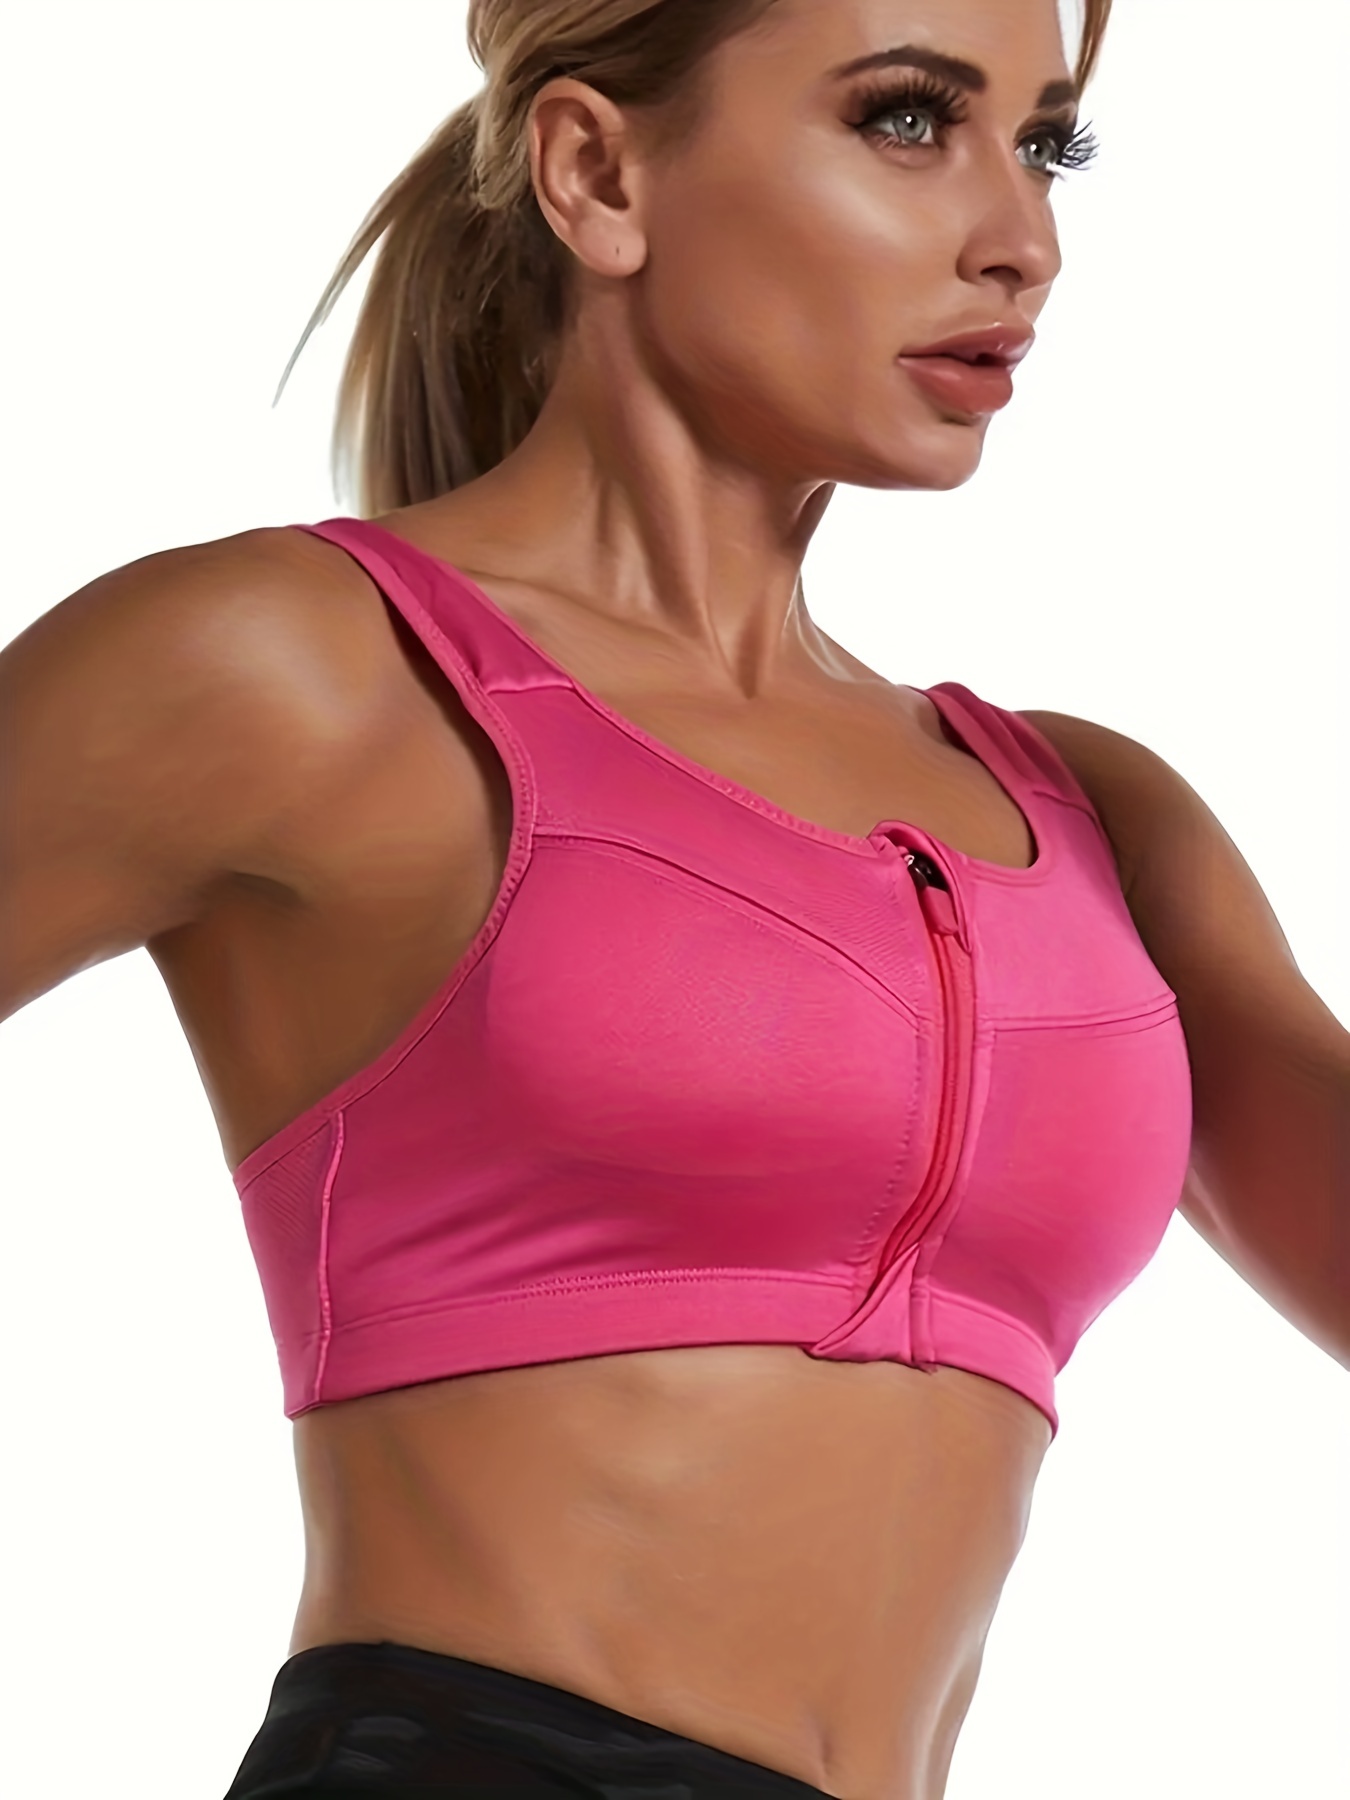 Adjustable sports bra with adjustable straps - Activewear